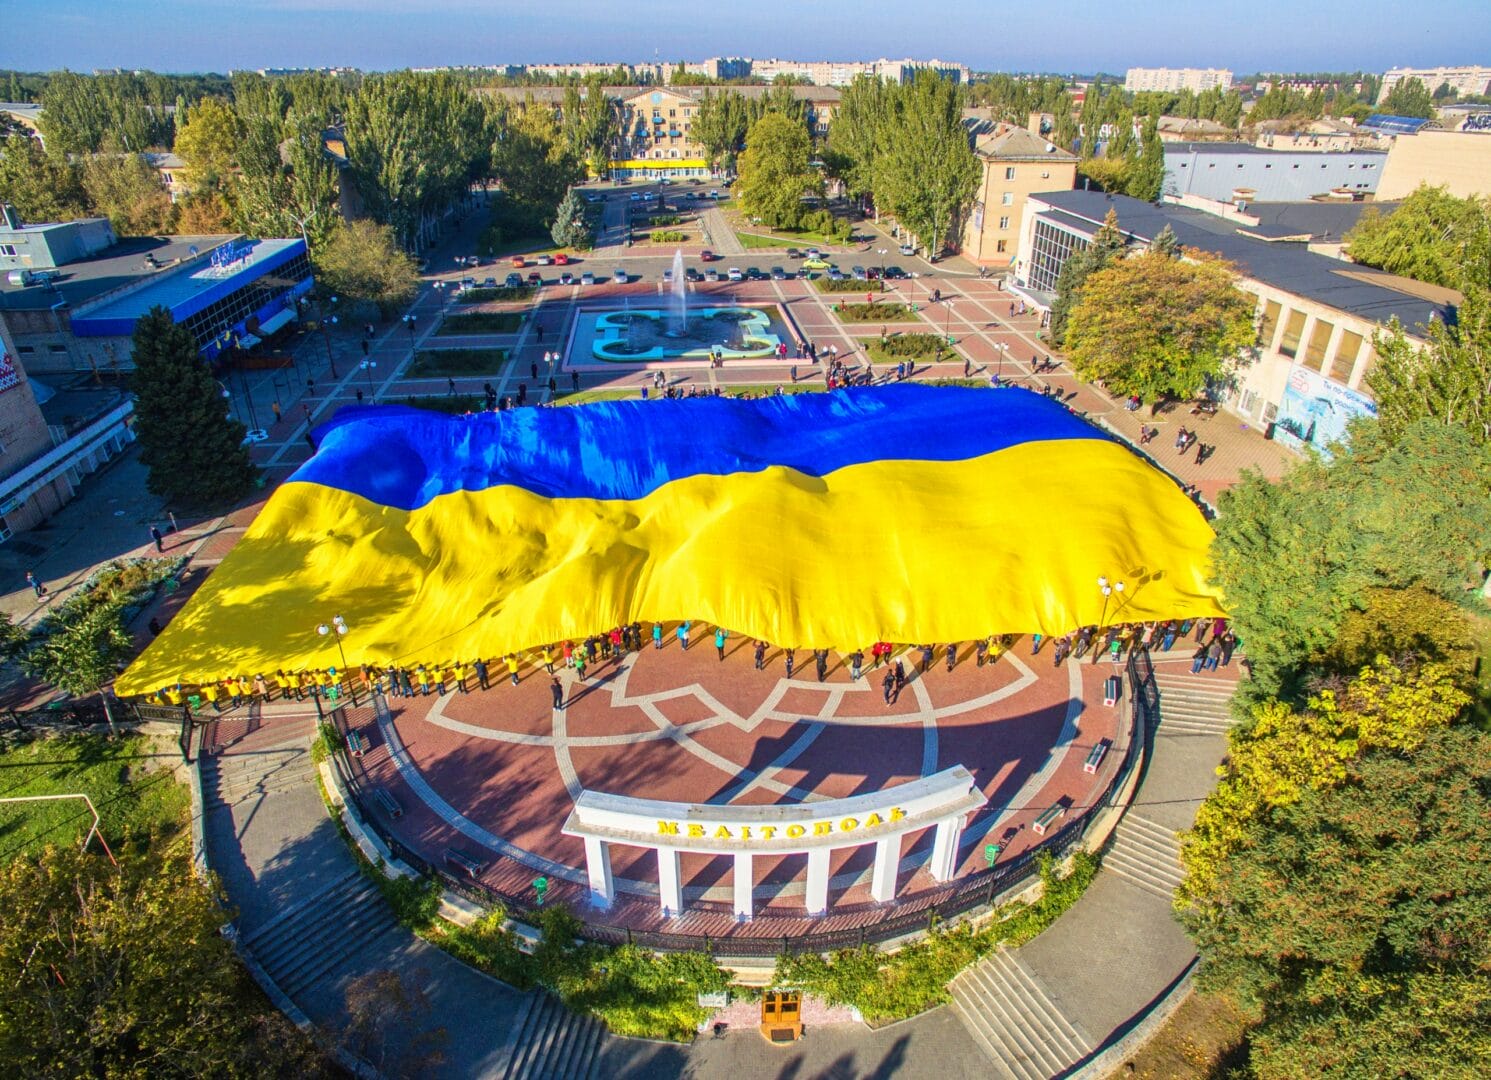 Unfurling the largest flag of Ukraine, 2020